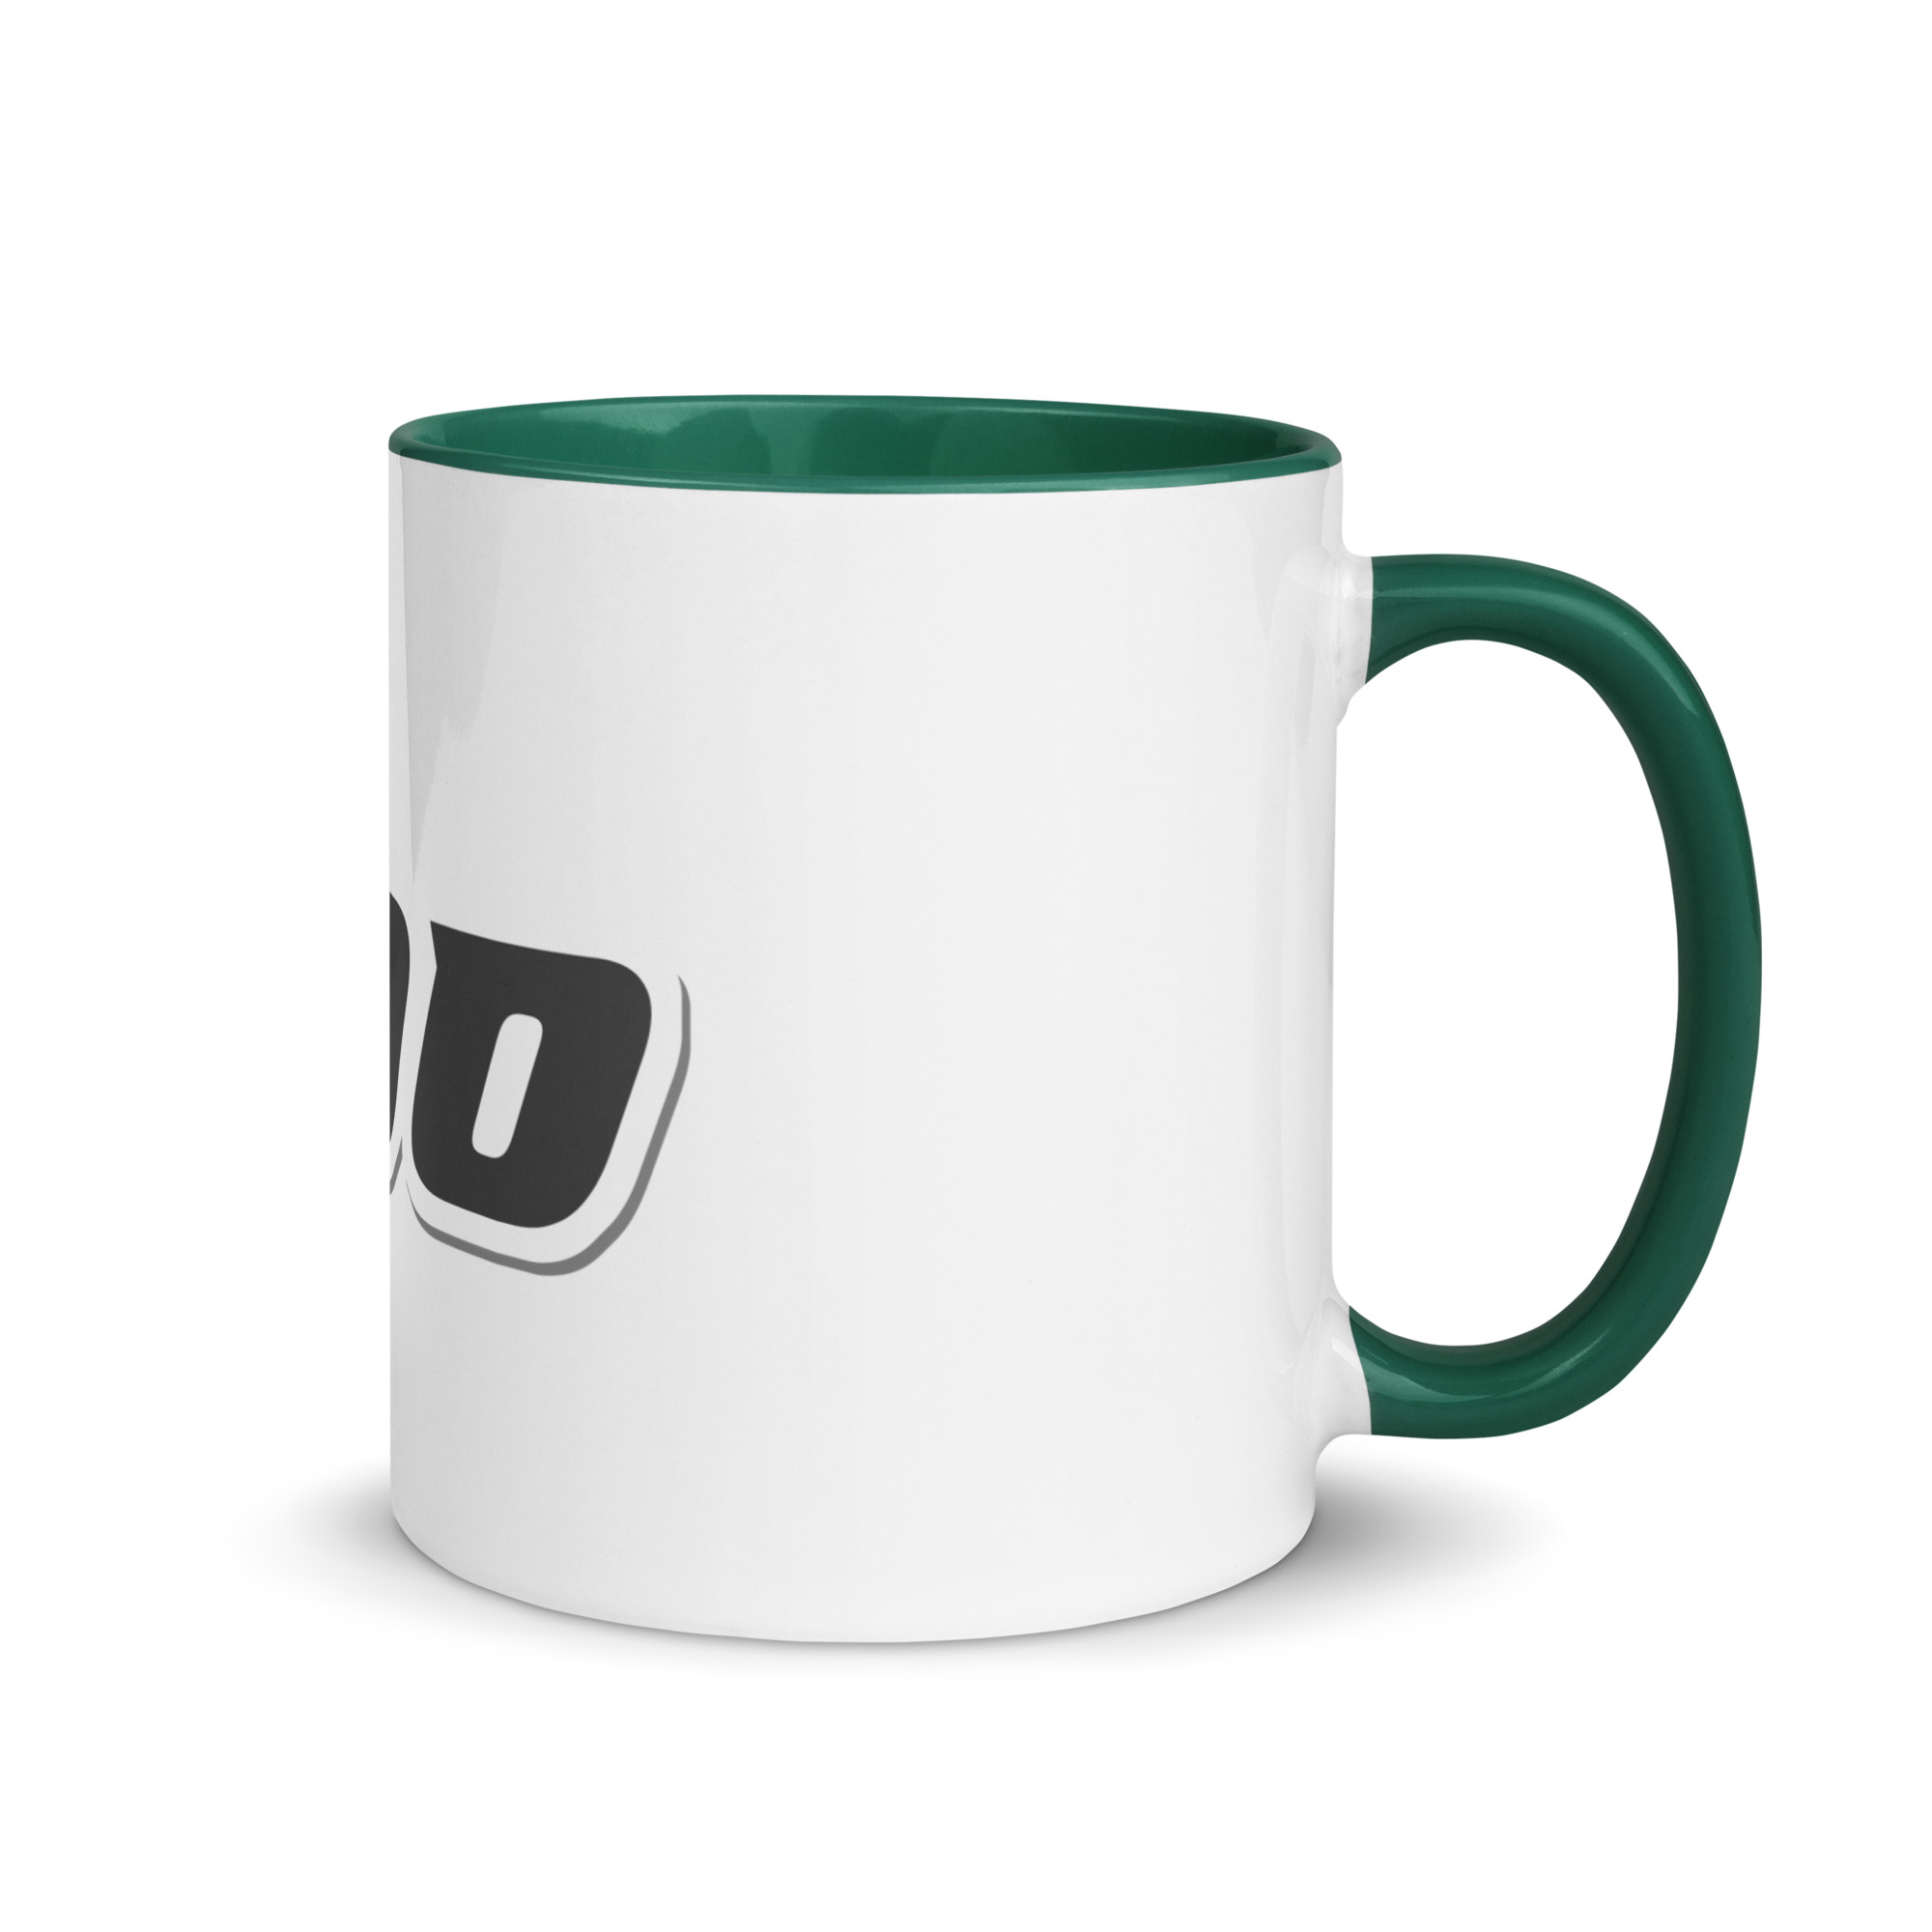 white-ceramic-mug-with-color-inside-dark-green-11-oz-right-6525b6484c3fc.jpg